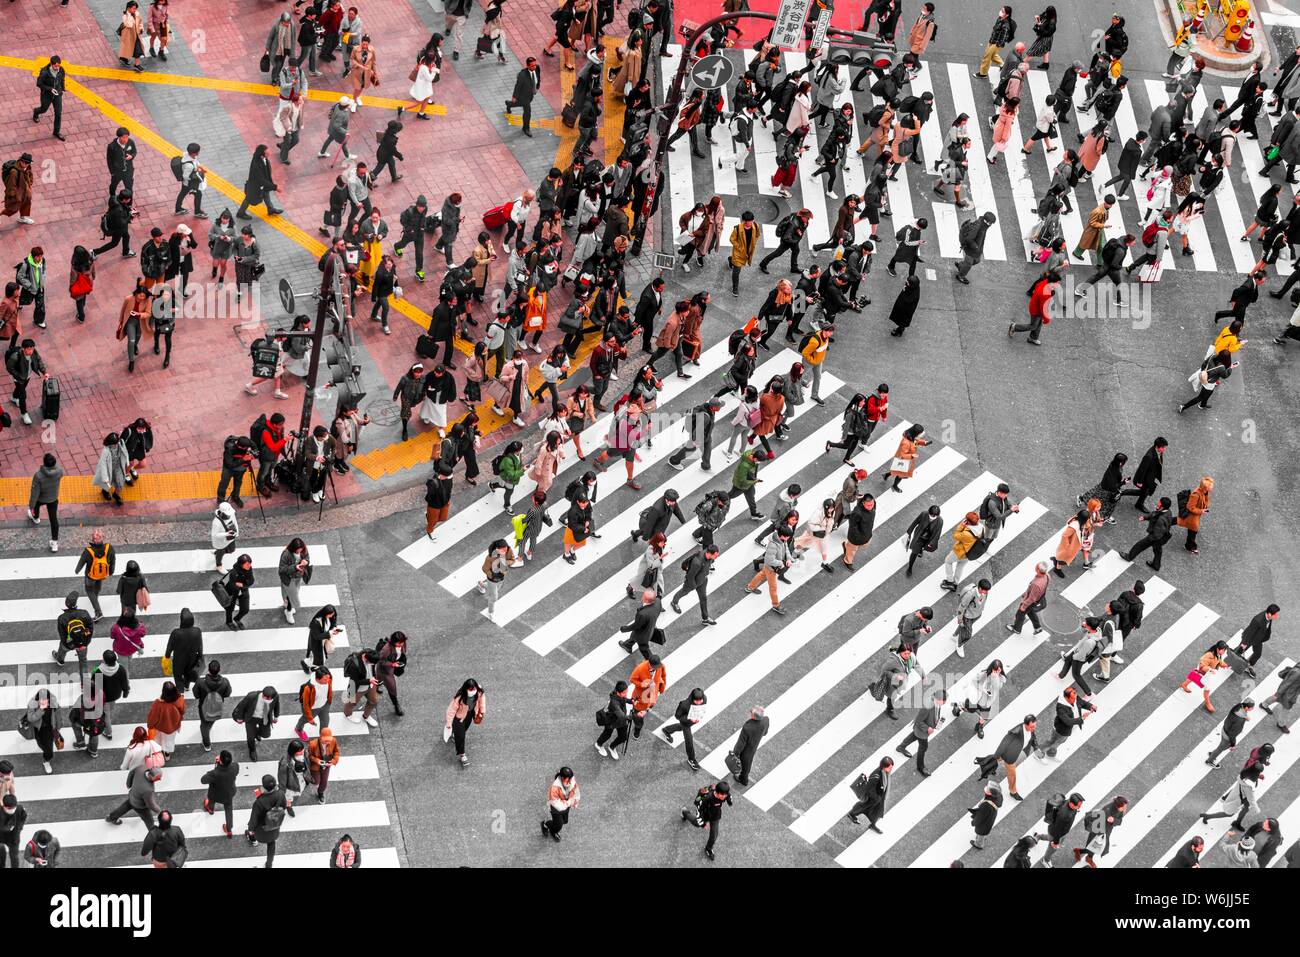 Shibuya crossing, crowds at intersection, many pedestrians cross zebra crossing, Shibuya, Udagawacho, Tokyo, Japan Stock Photo